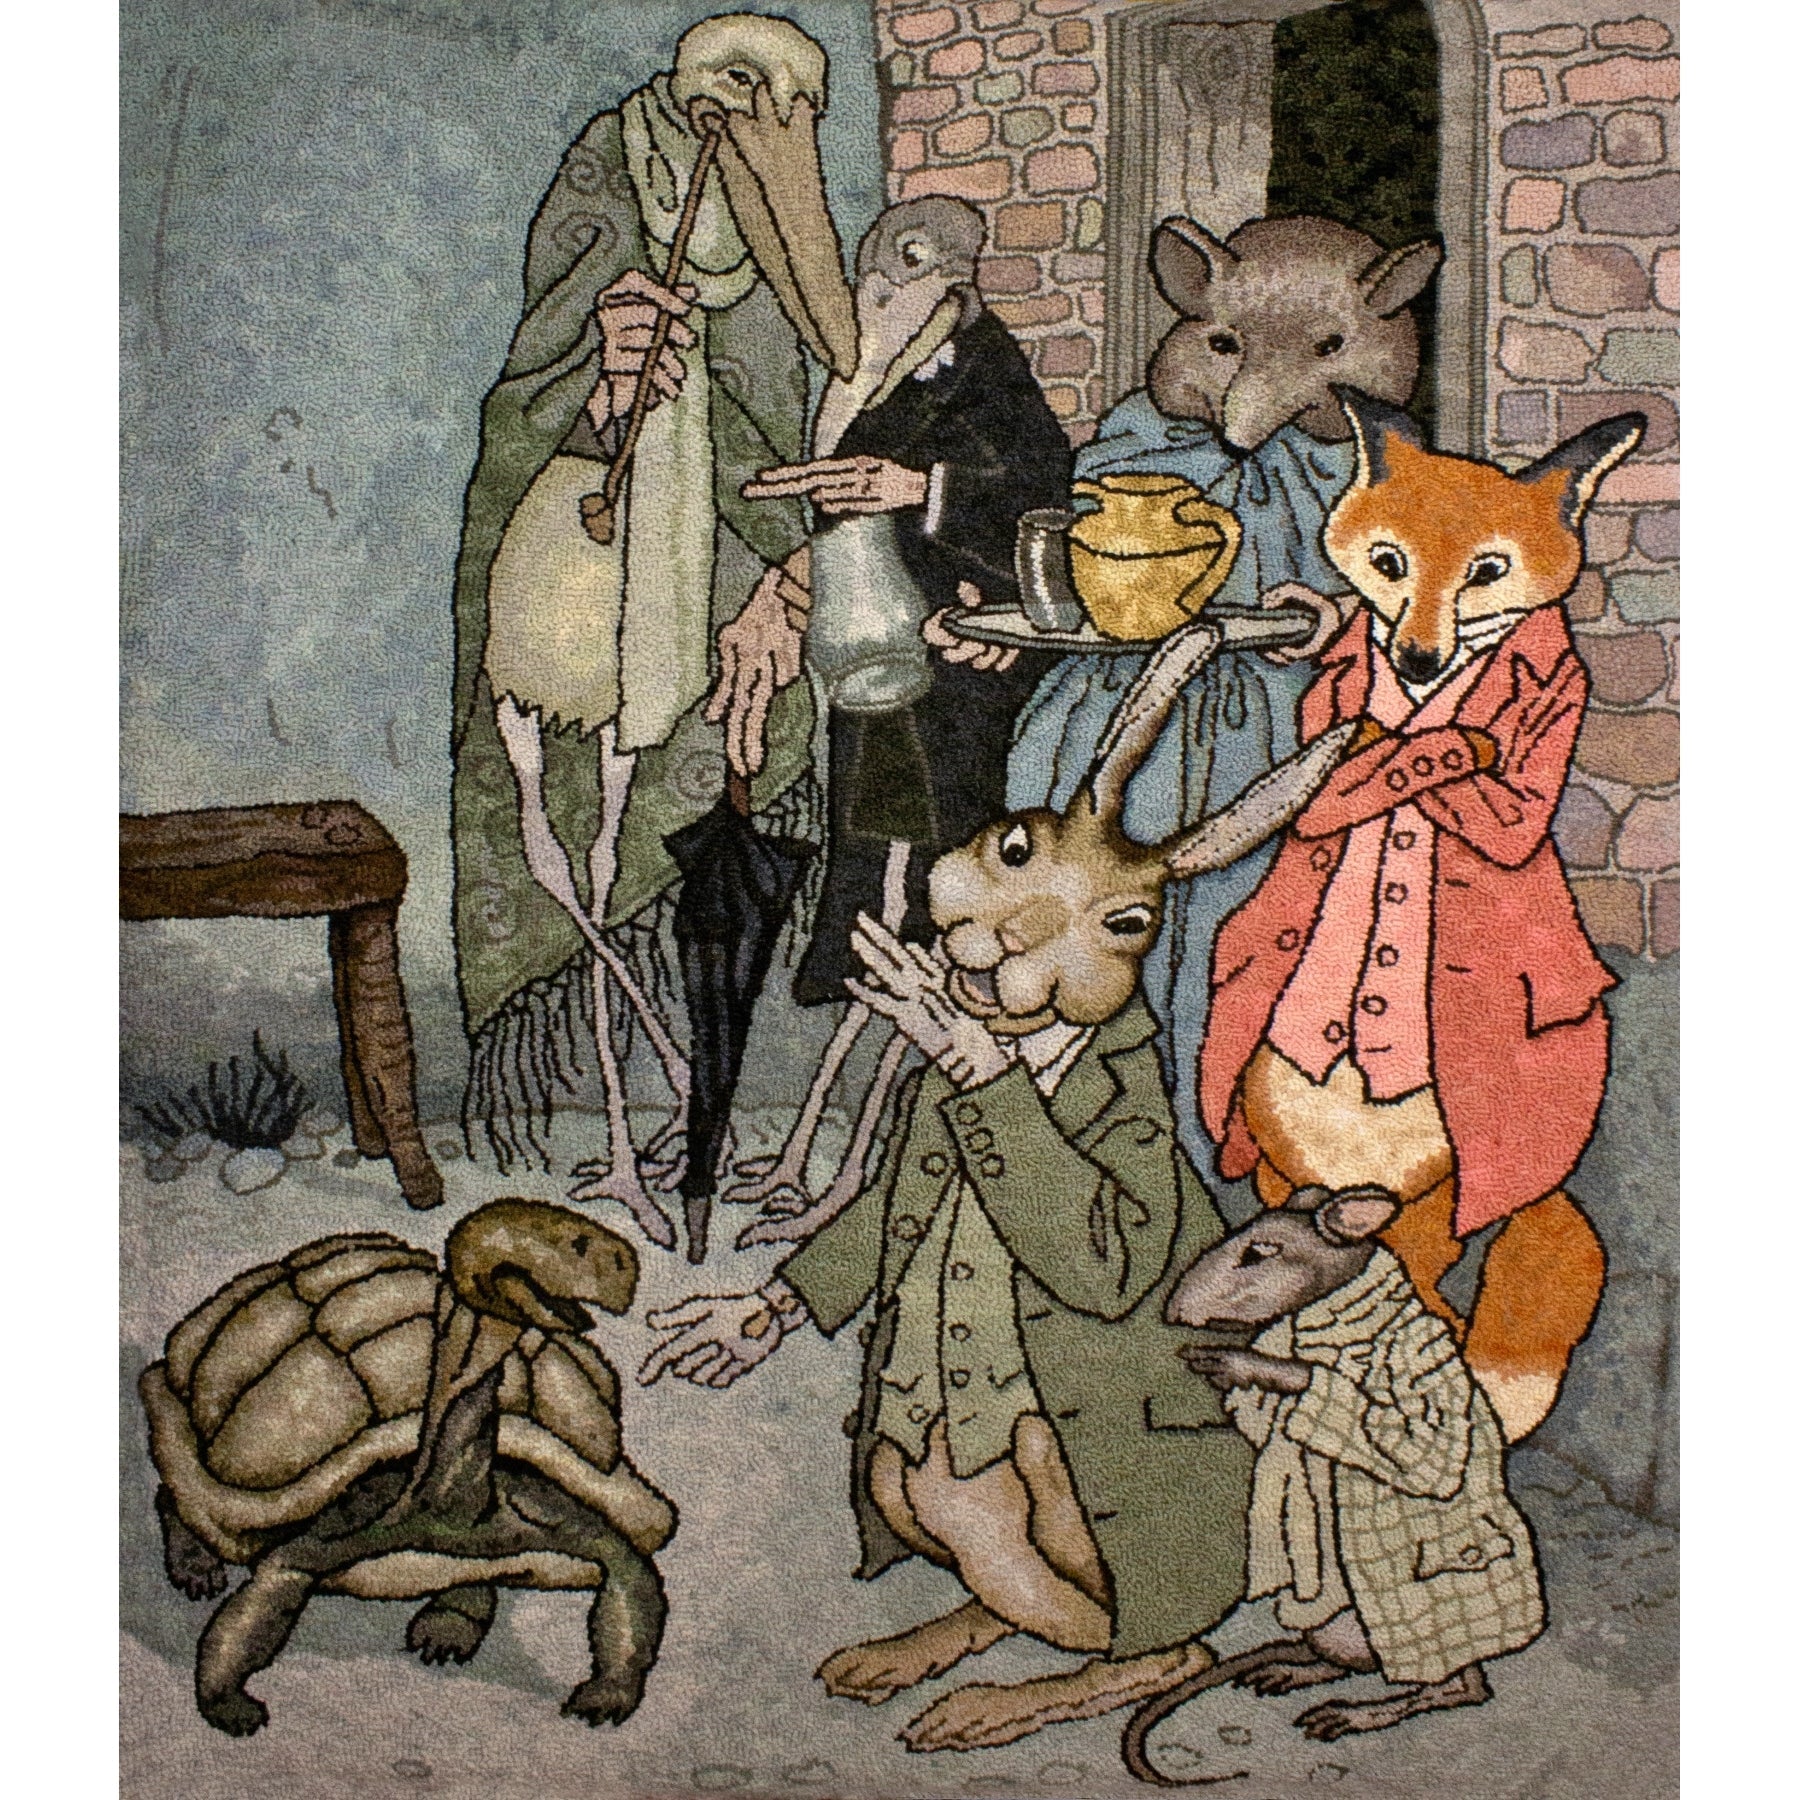 PR1949: The Tortoise and the Hare, ill. Arthur Rackham, 1912